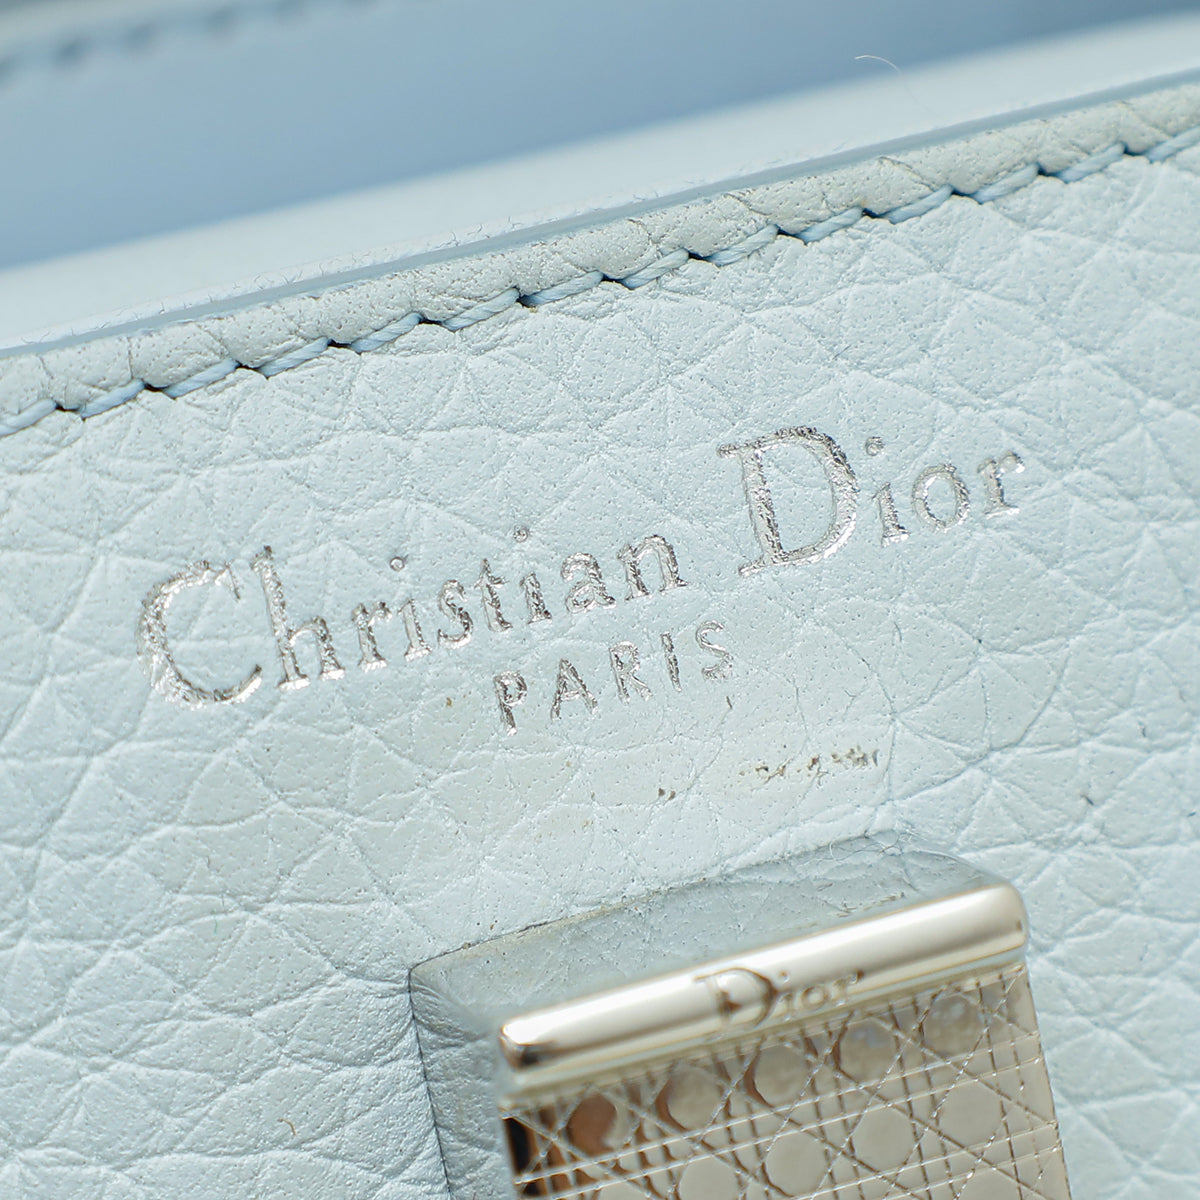 Christian Dior Baby Blue Diorever Mini Top Handle Bag